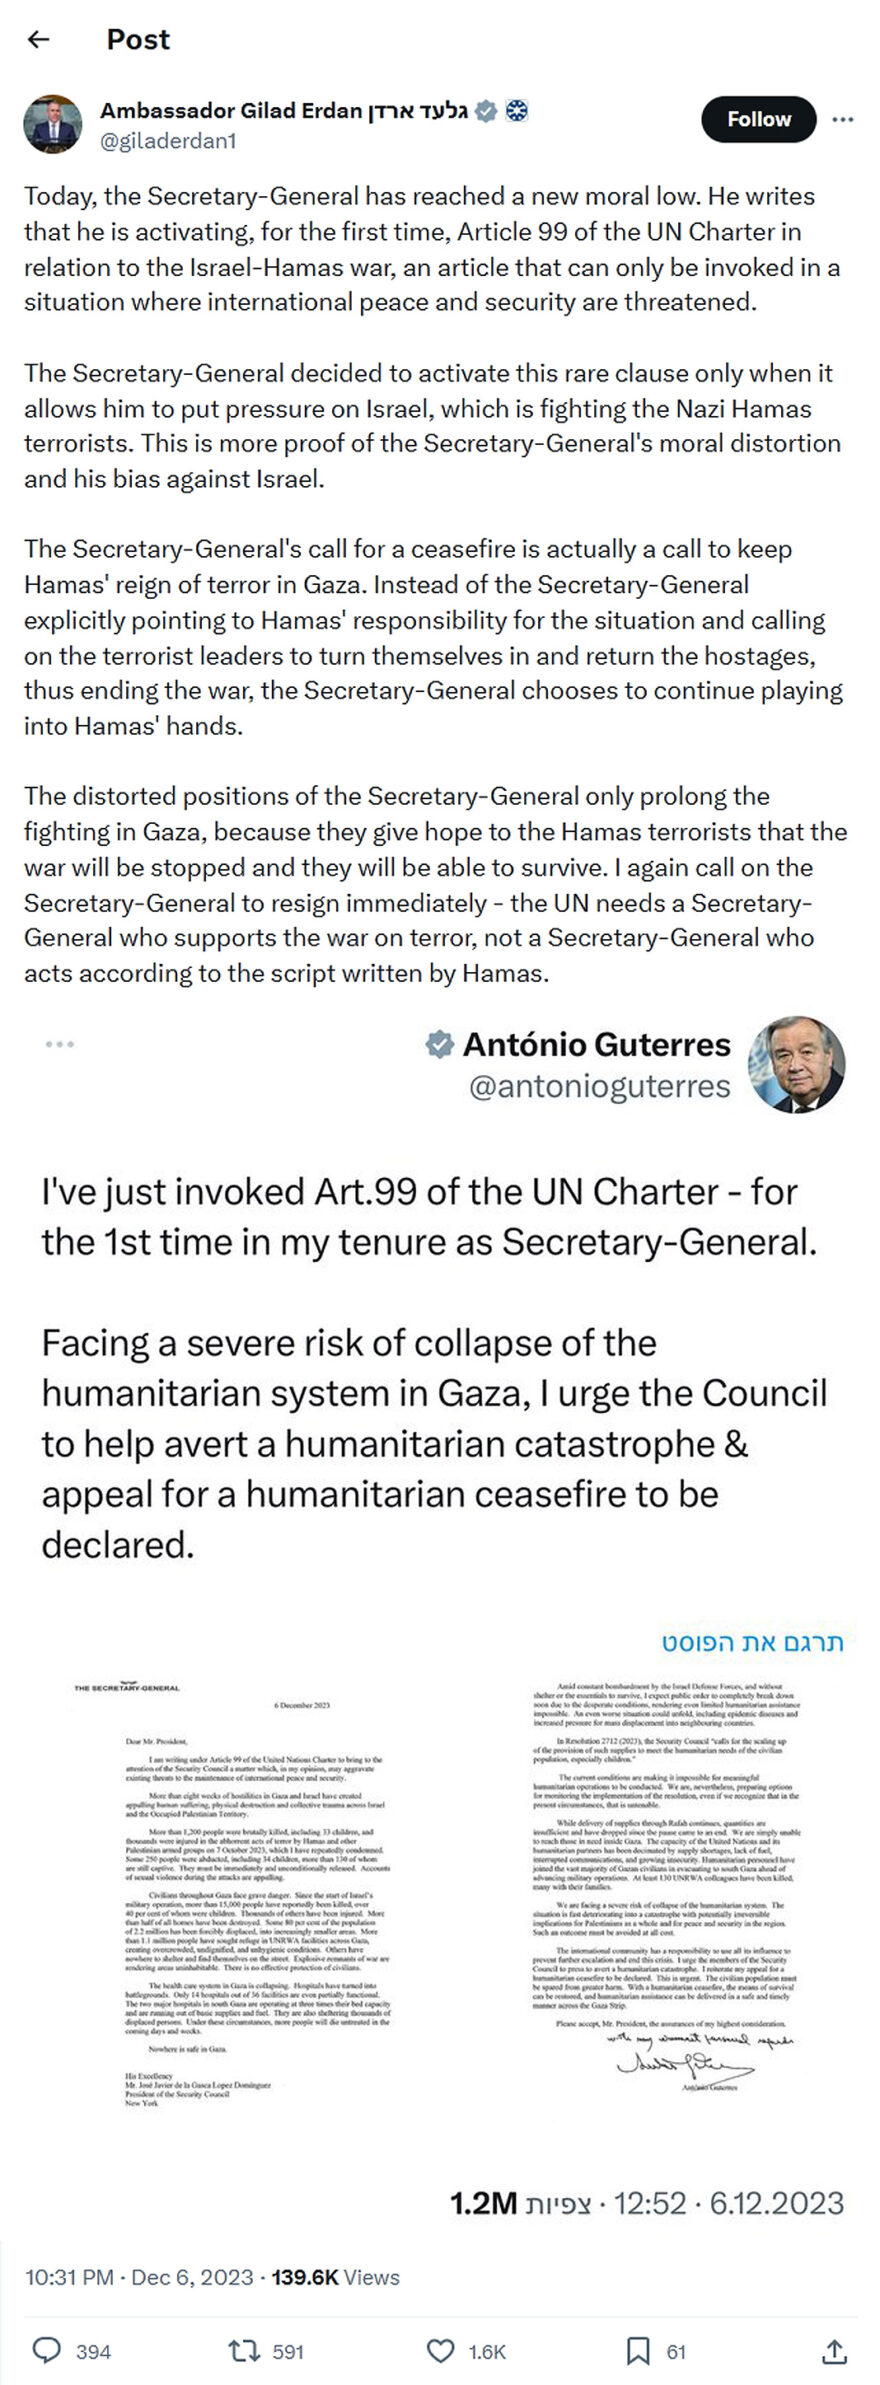 Ambassador Gilad Erdan-tweet-December 6, 2023-UN Secretary-General activating Article 99 of the UN Charter